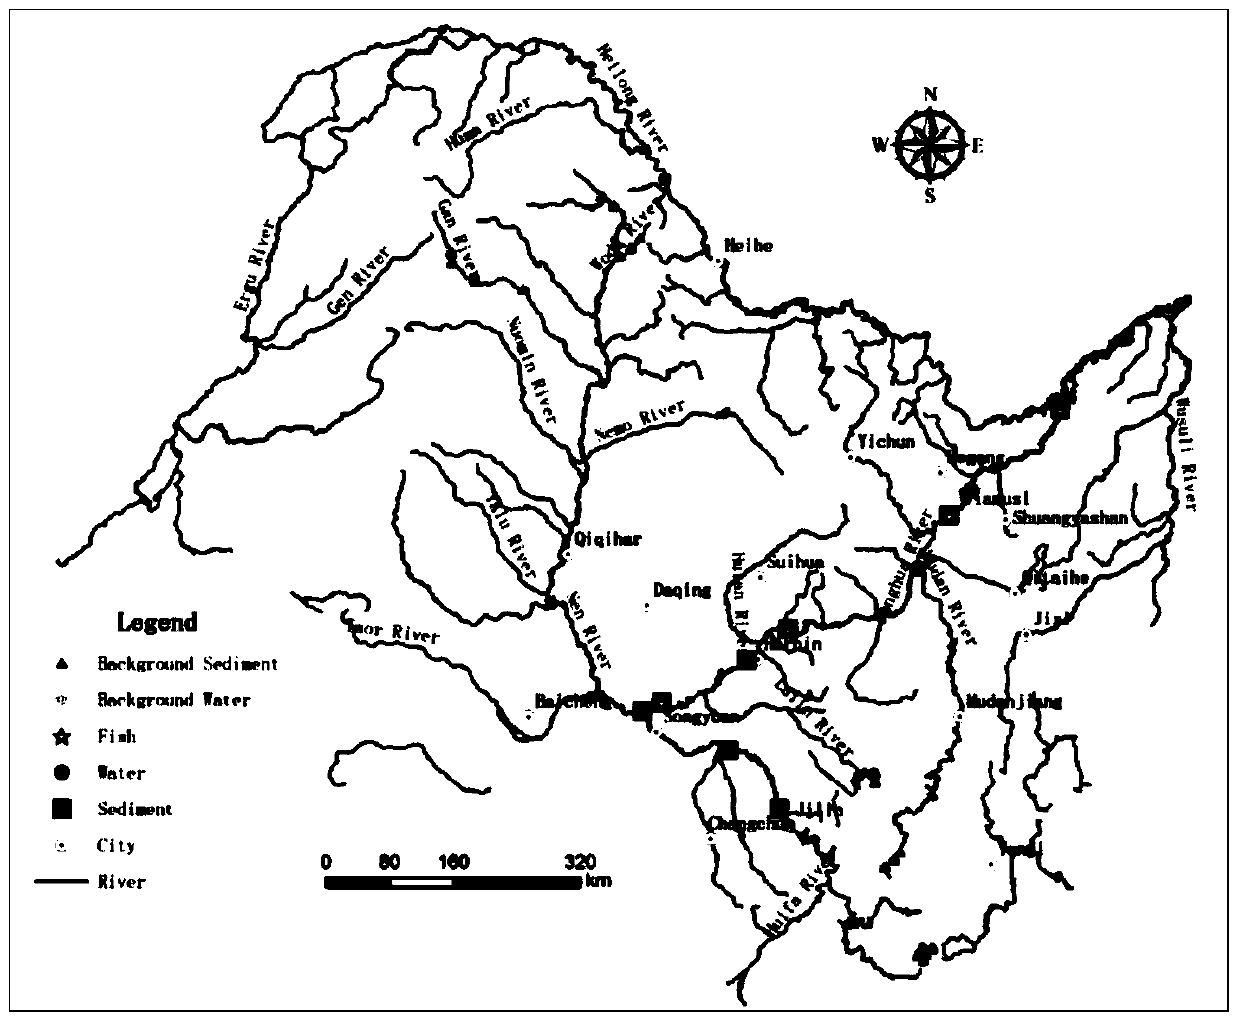 Modeling method of heavy metal optimal control pollutant screening model based on river ecosystem